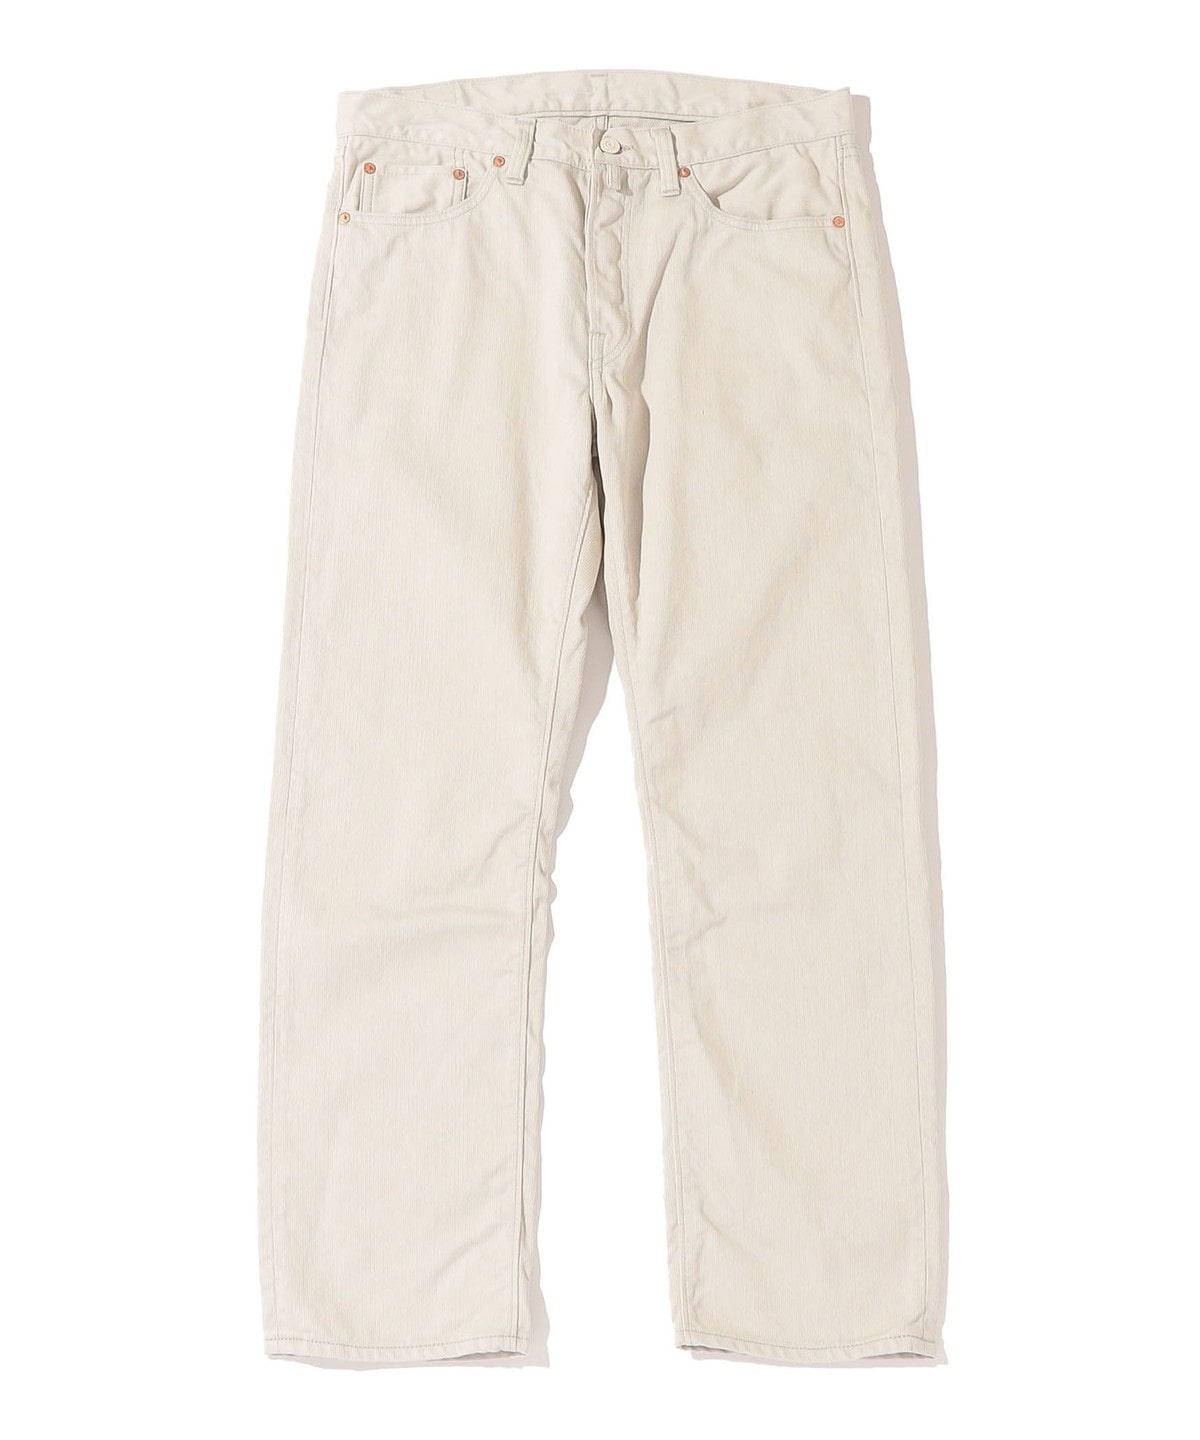 【Southwick別注】WAREHOUSE & CO.: Basic Pique 5Pocket Pants オフホワイト